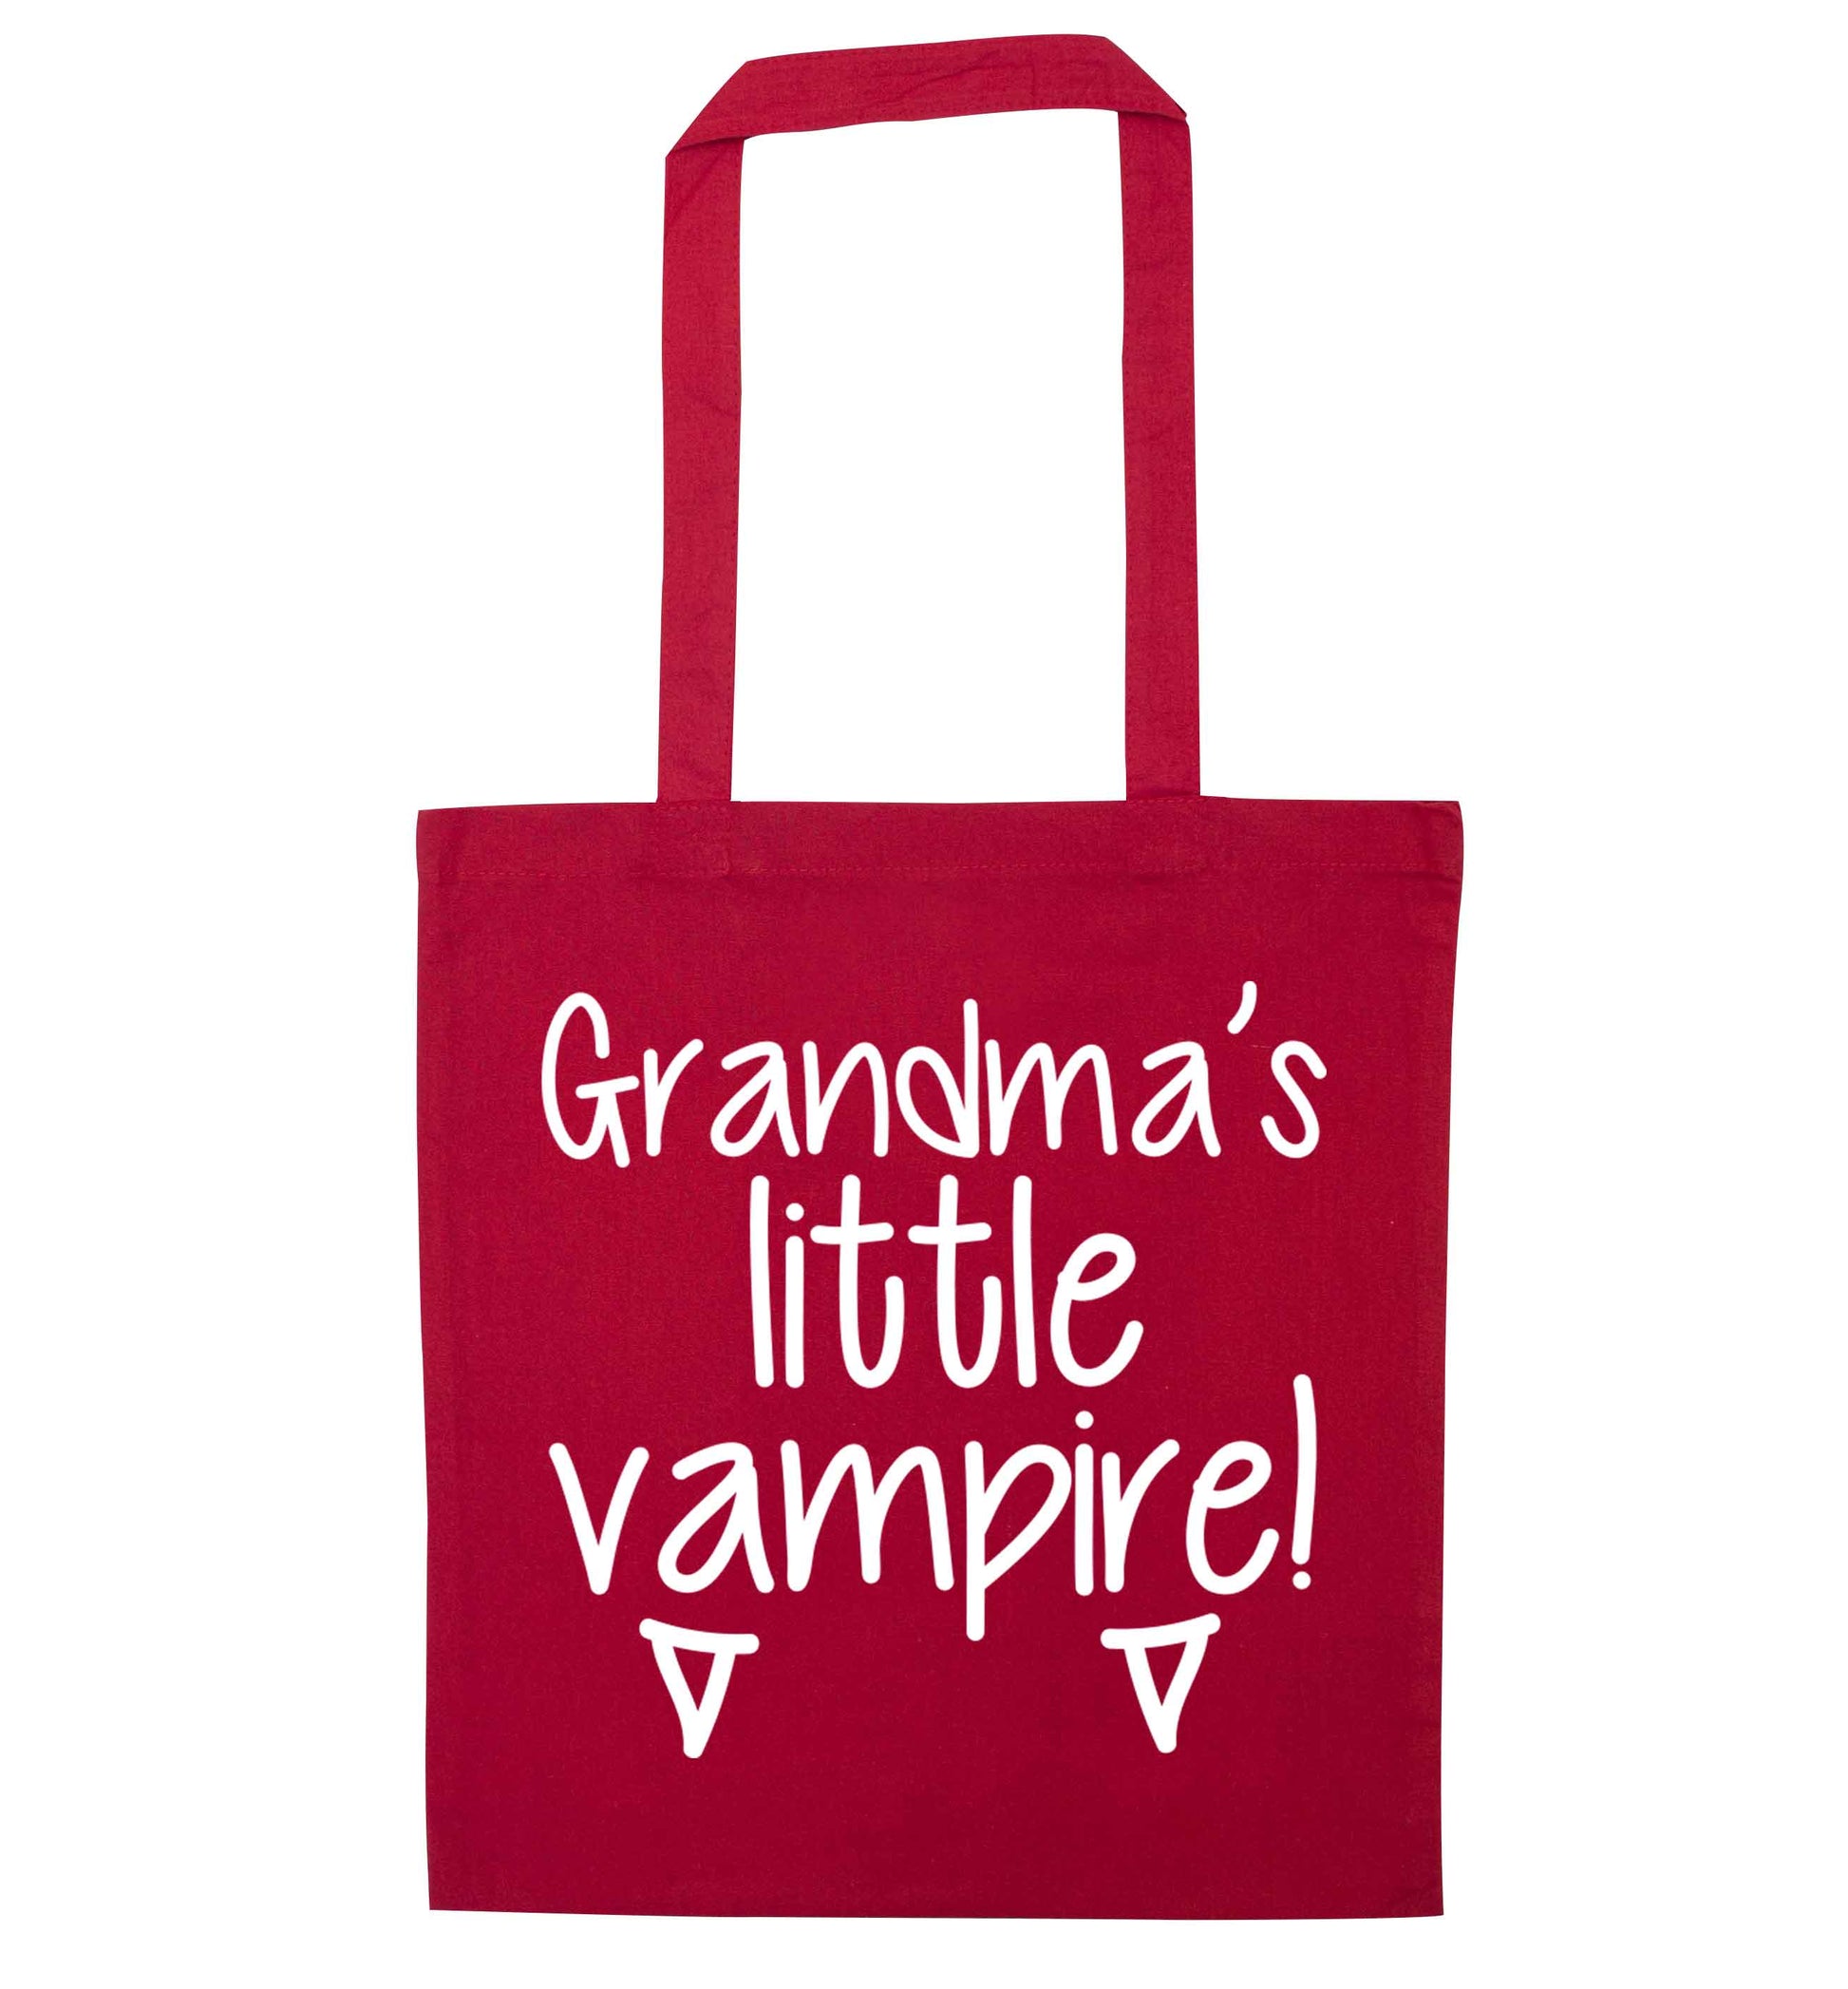 Grandma's little vampire red tote bag